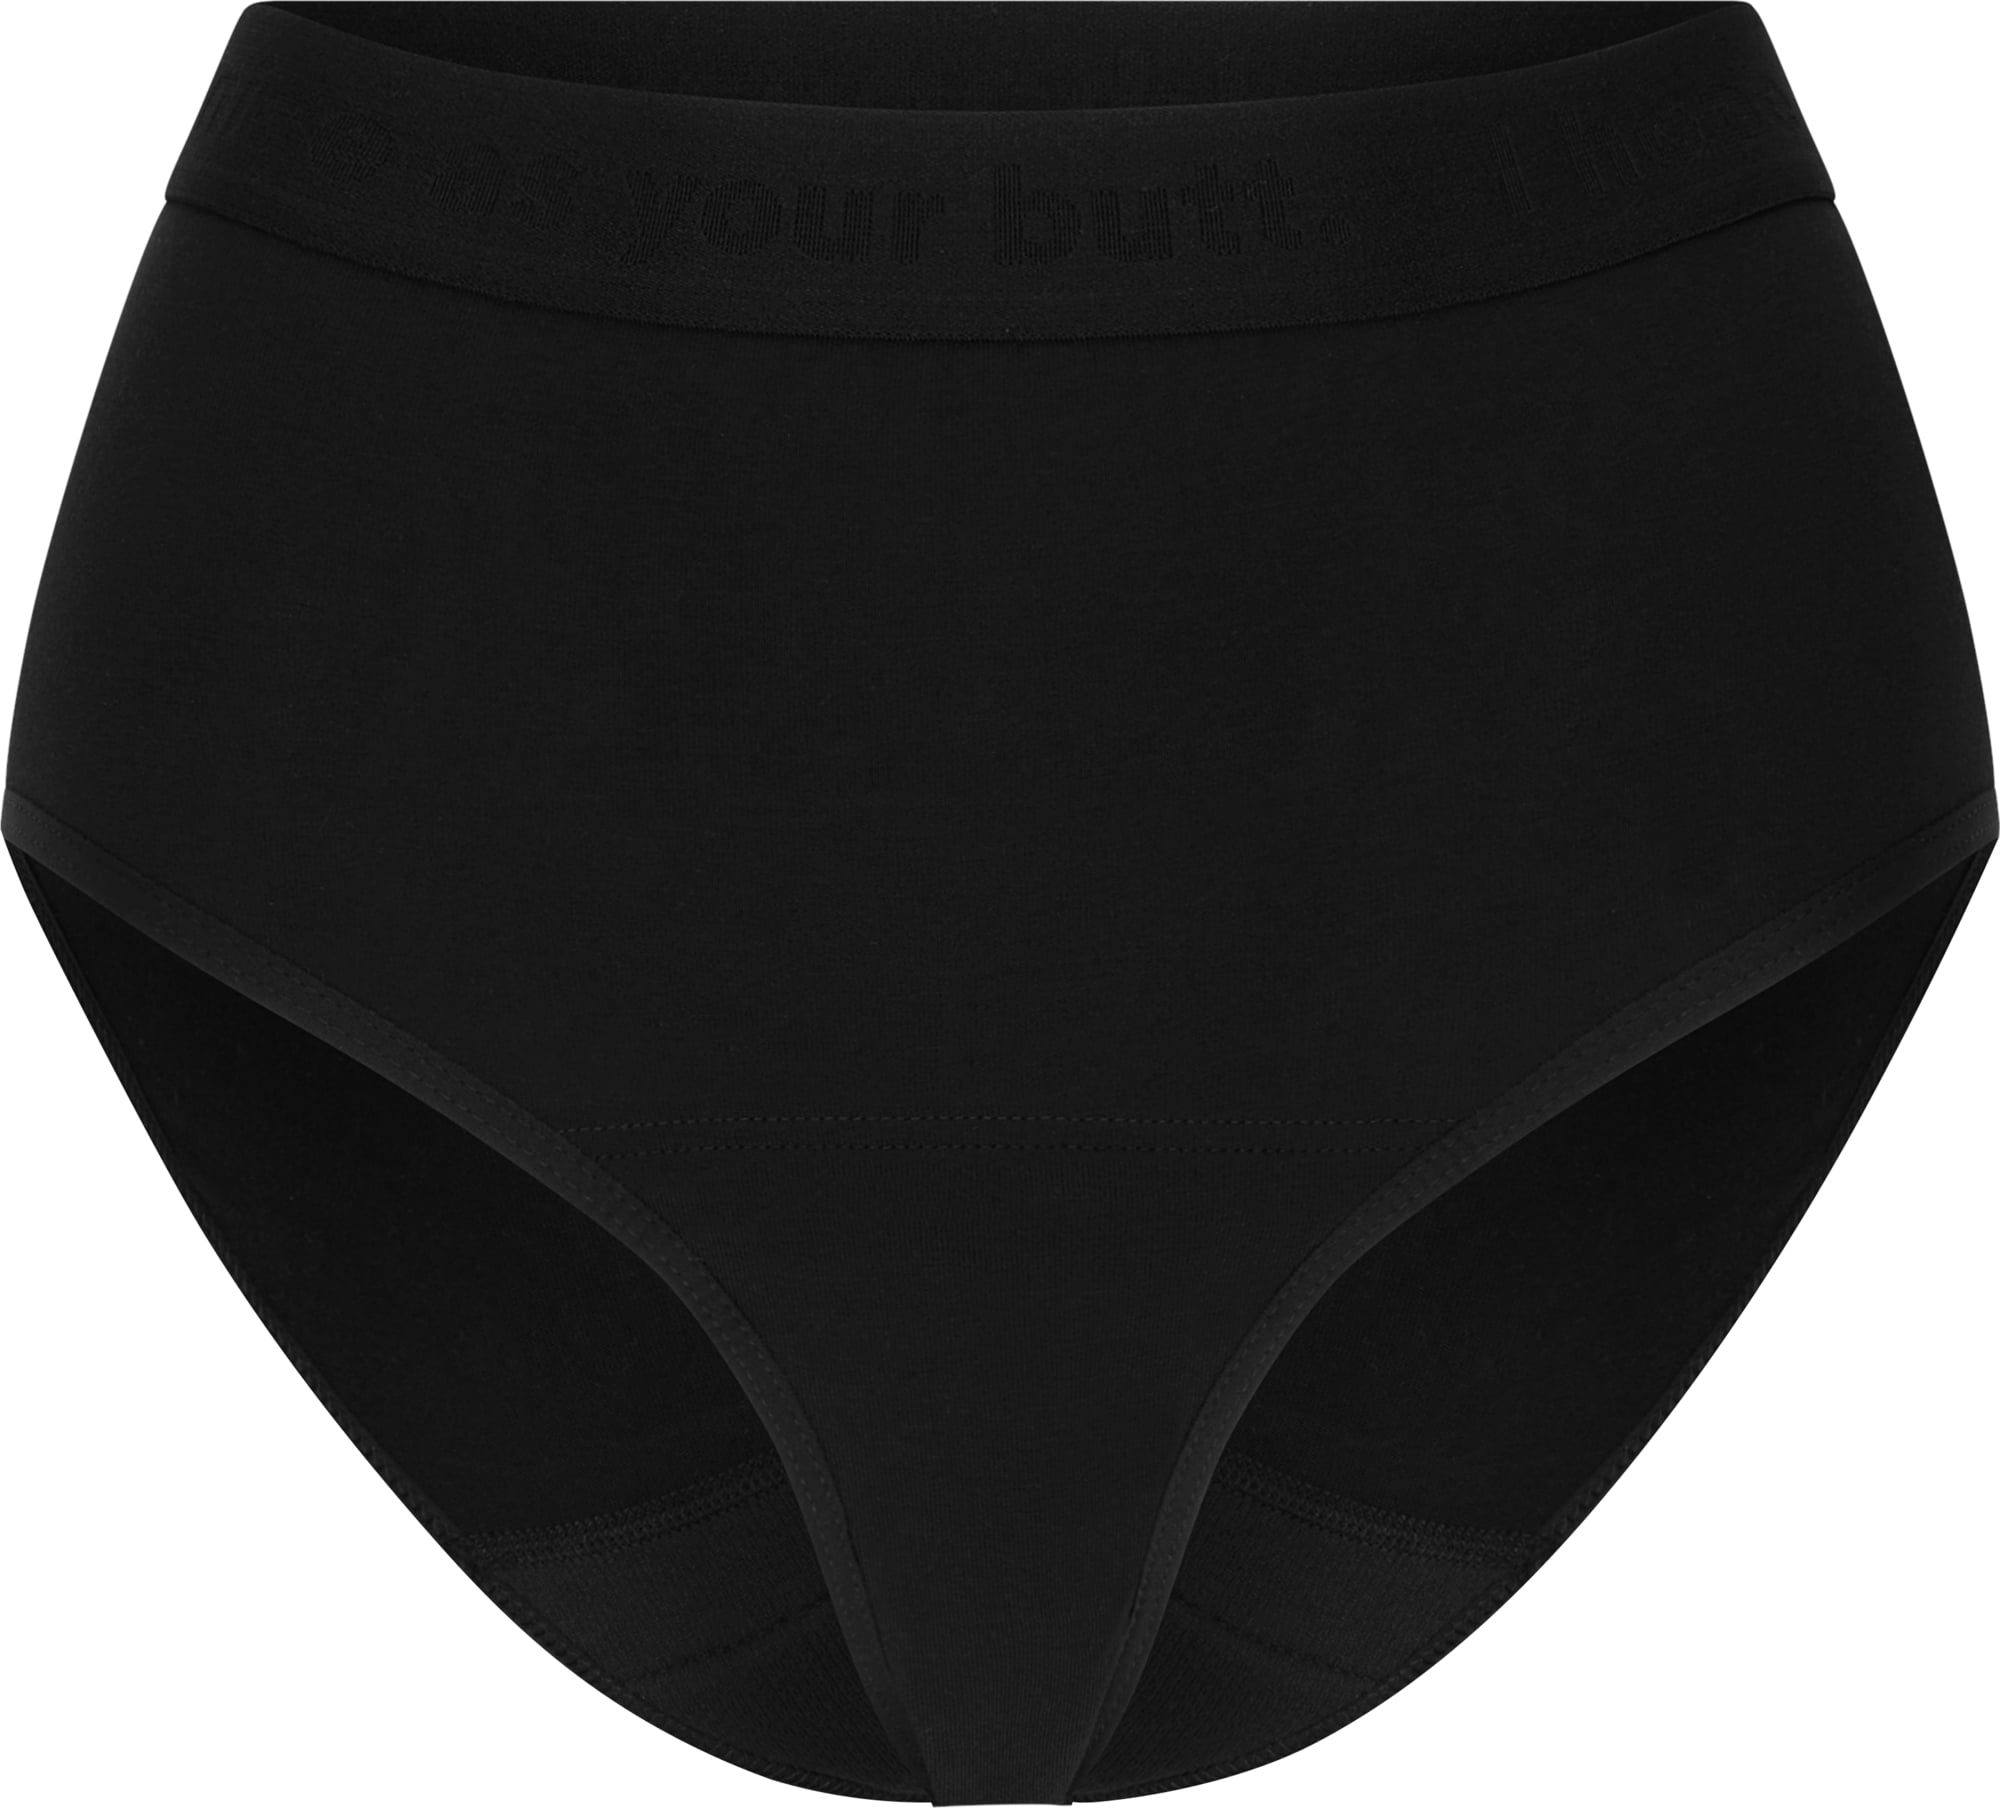 The Female Company Period Underwear - High Waist Basic Black